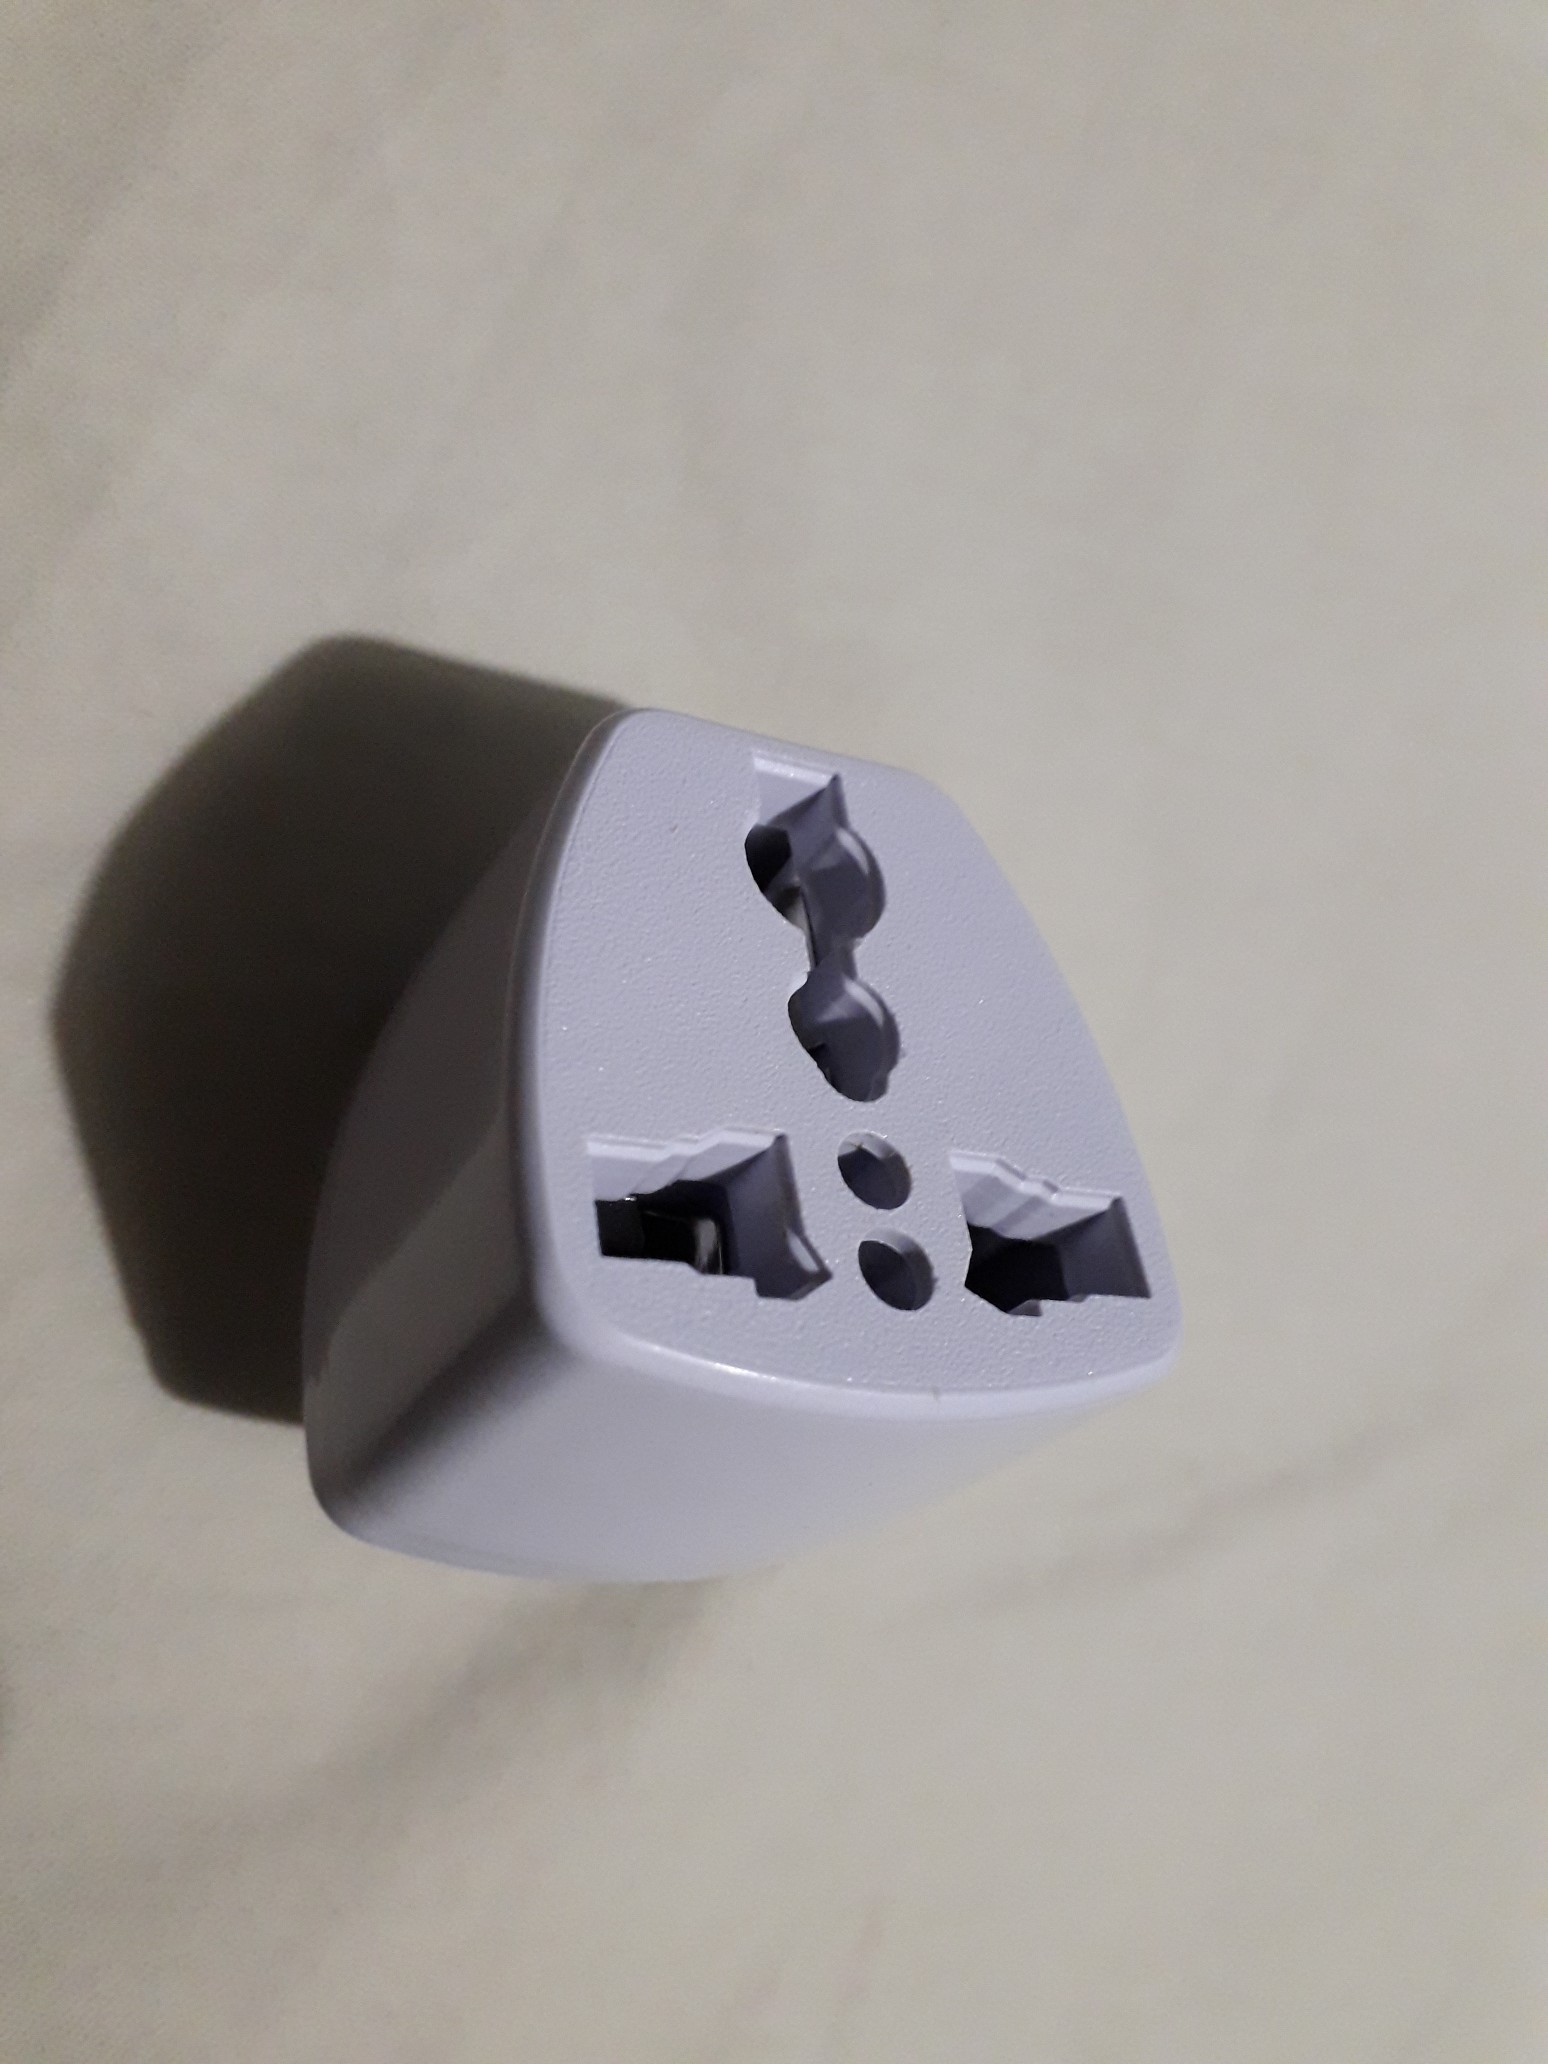 accesorios para electronica - adaptador de corriente de enchufe de el reino unido a enchufe 0